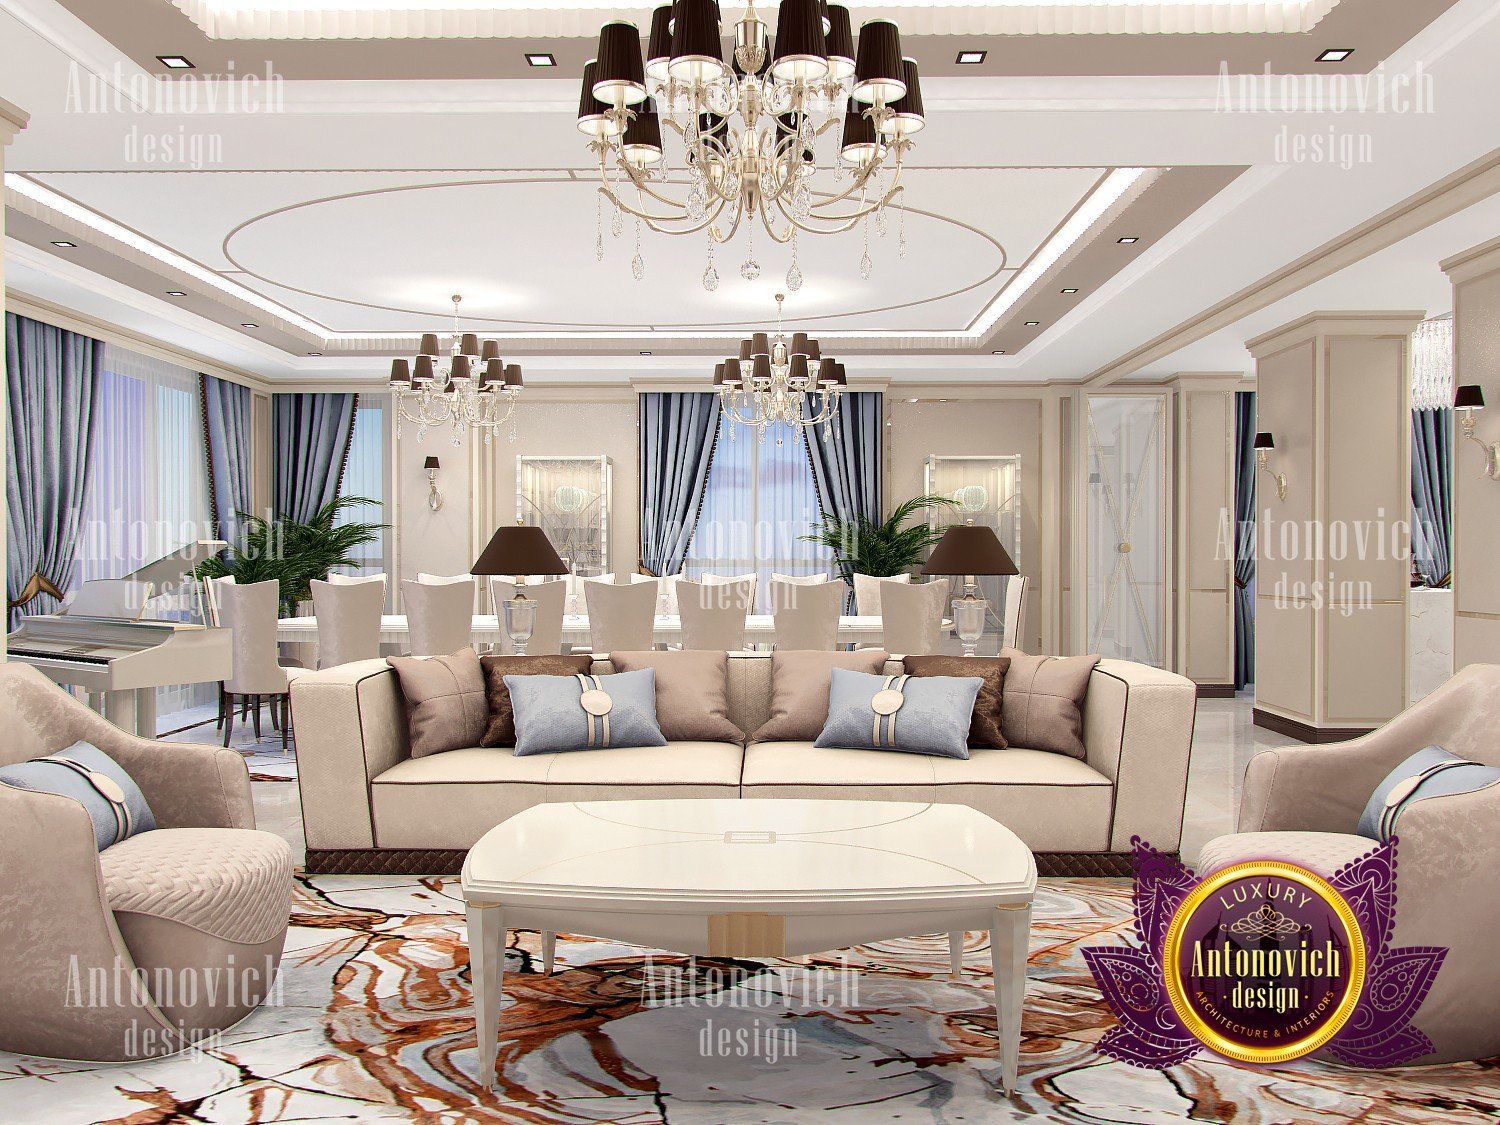 Modern Home Design Nigeria, Interior Design For Living Room In Nigeria